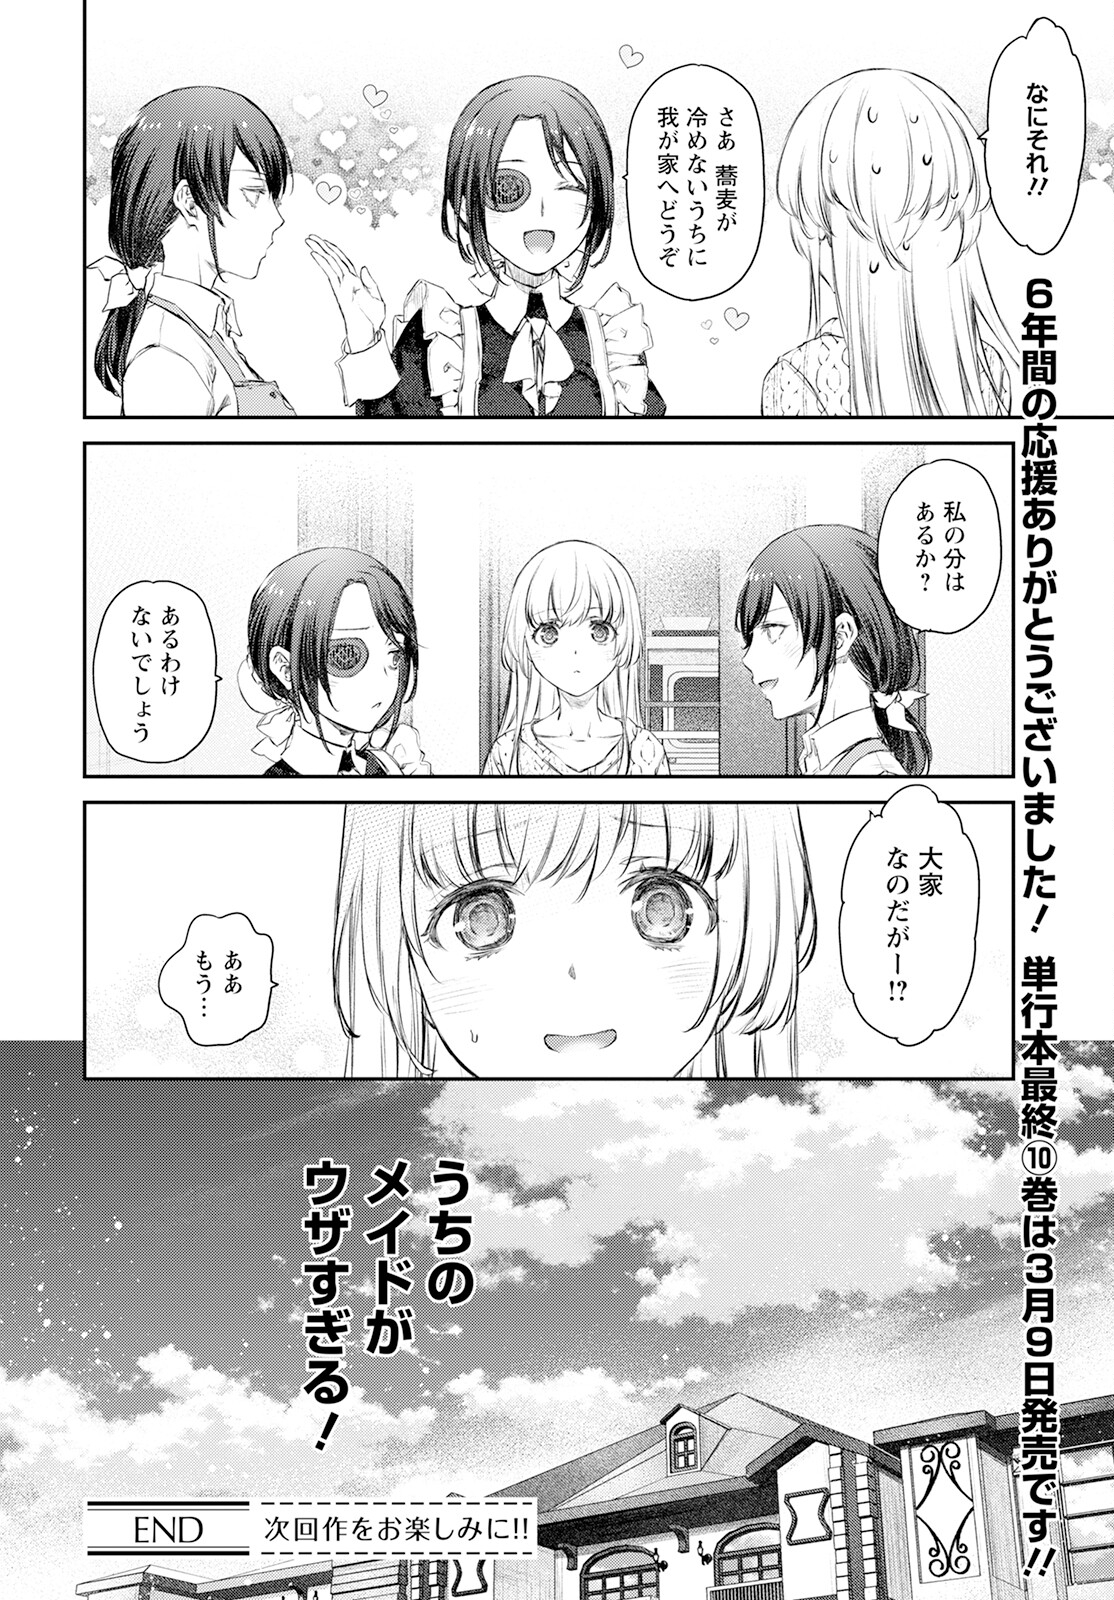 Uchi no Maid ga Uzasugiru! - Chapter 58 - Page 34